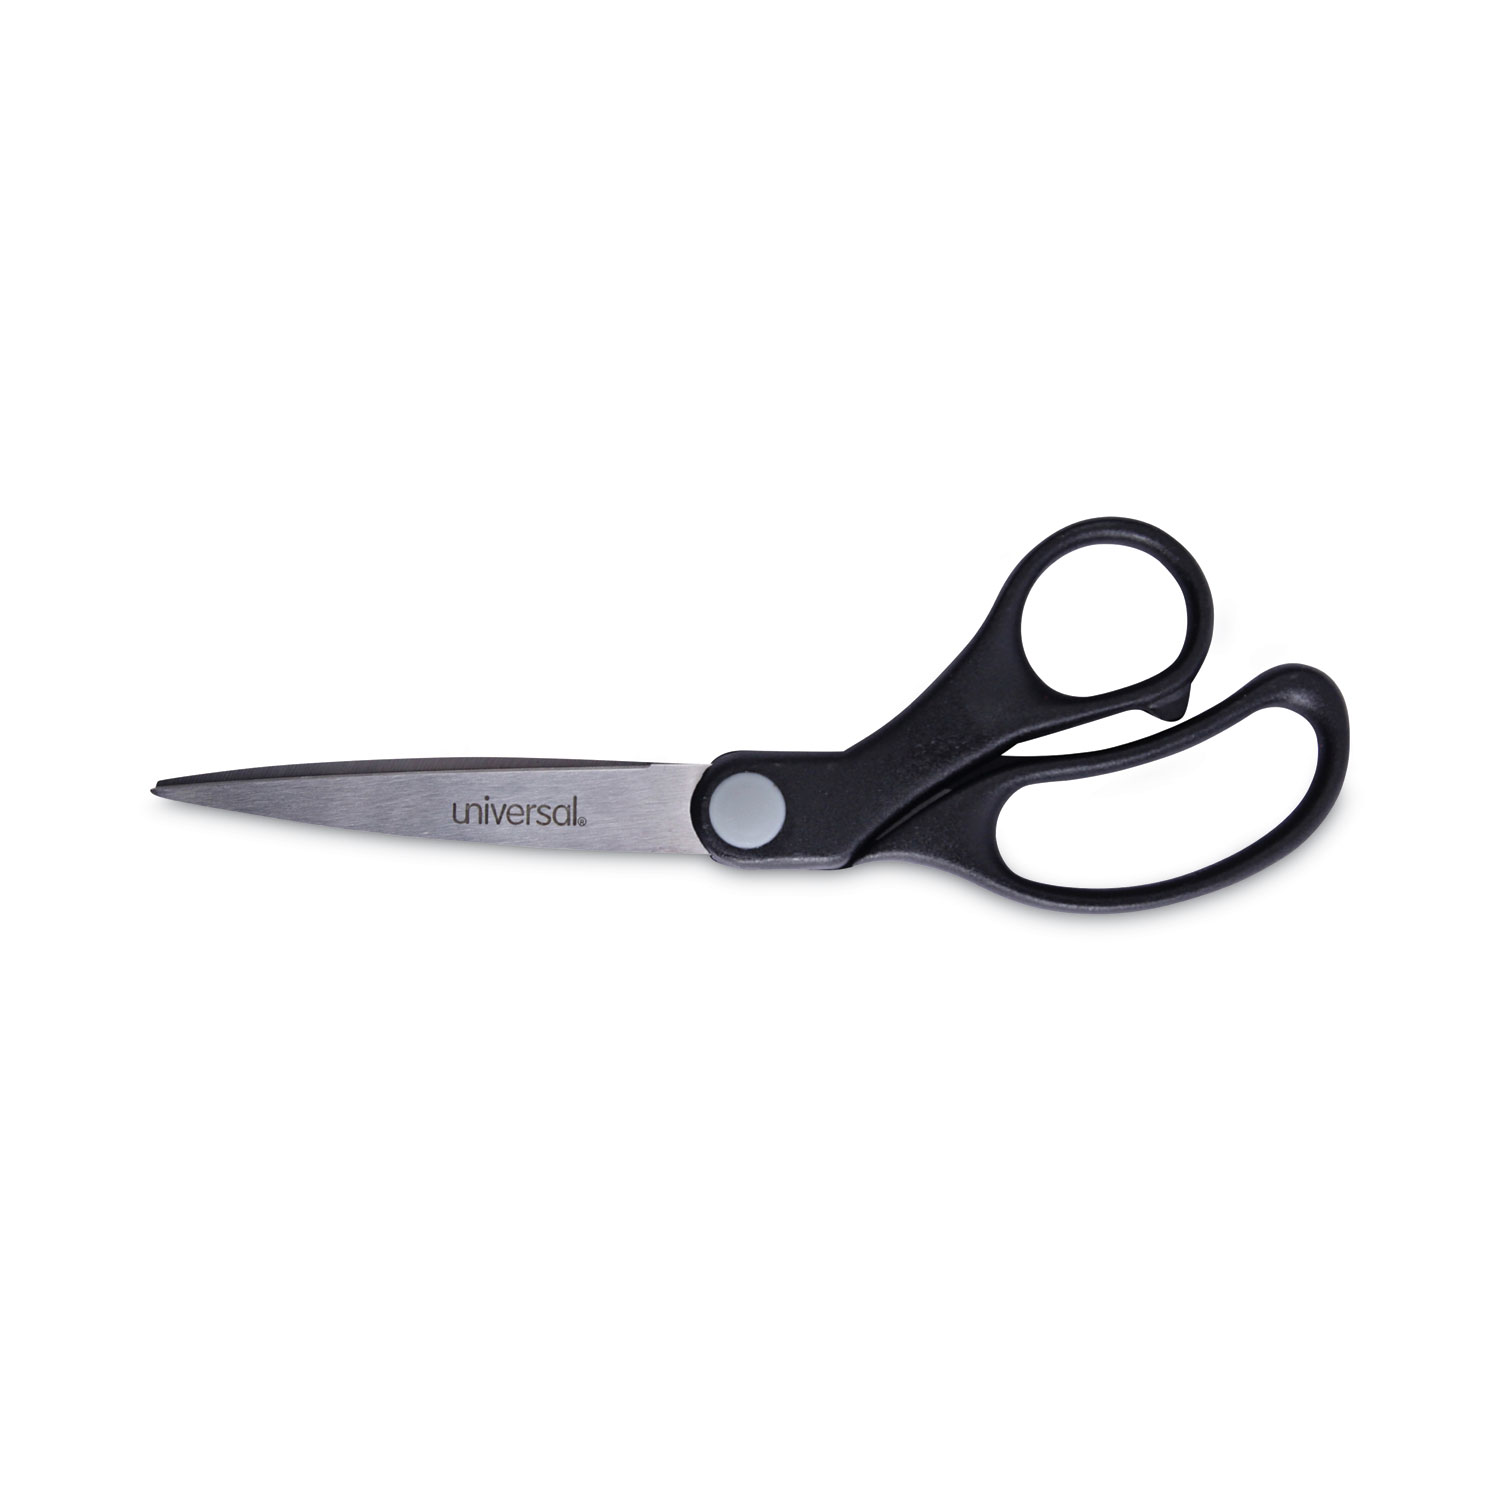 Fiskars All-Purpose Scissors 8 inch Length